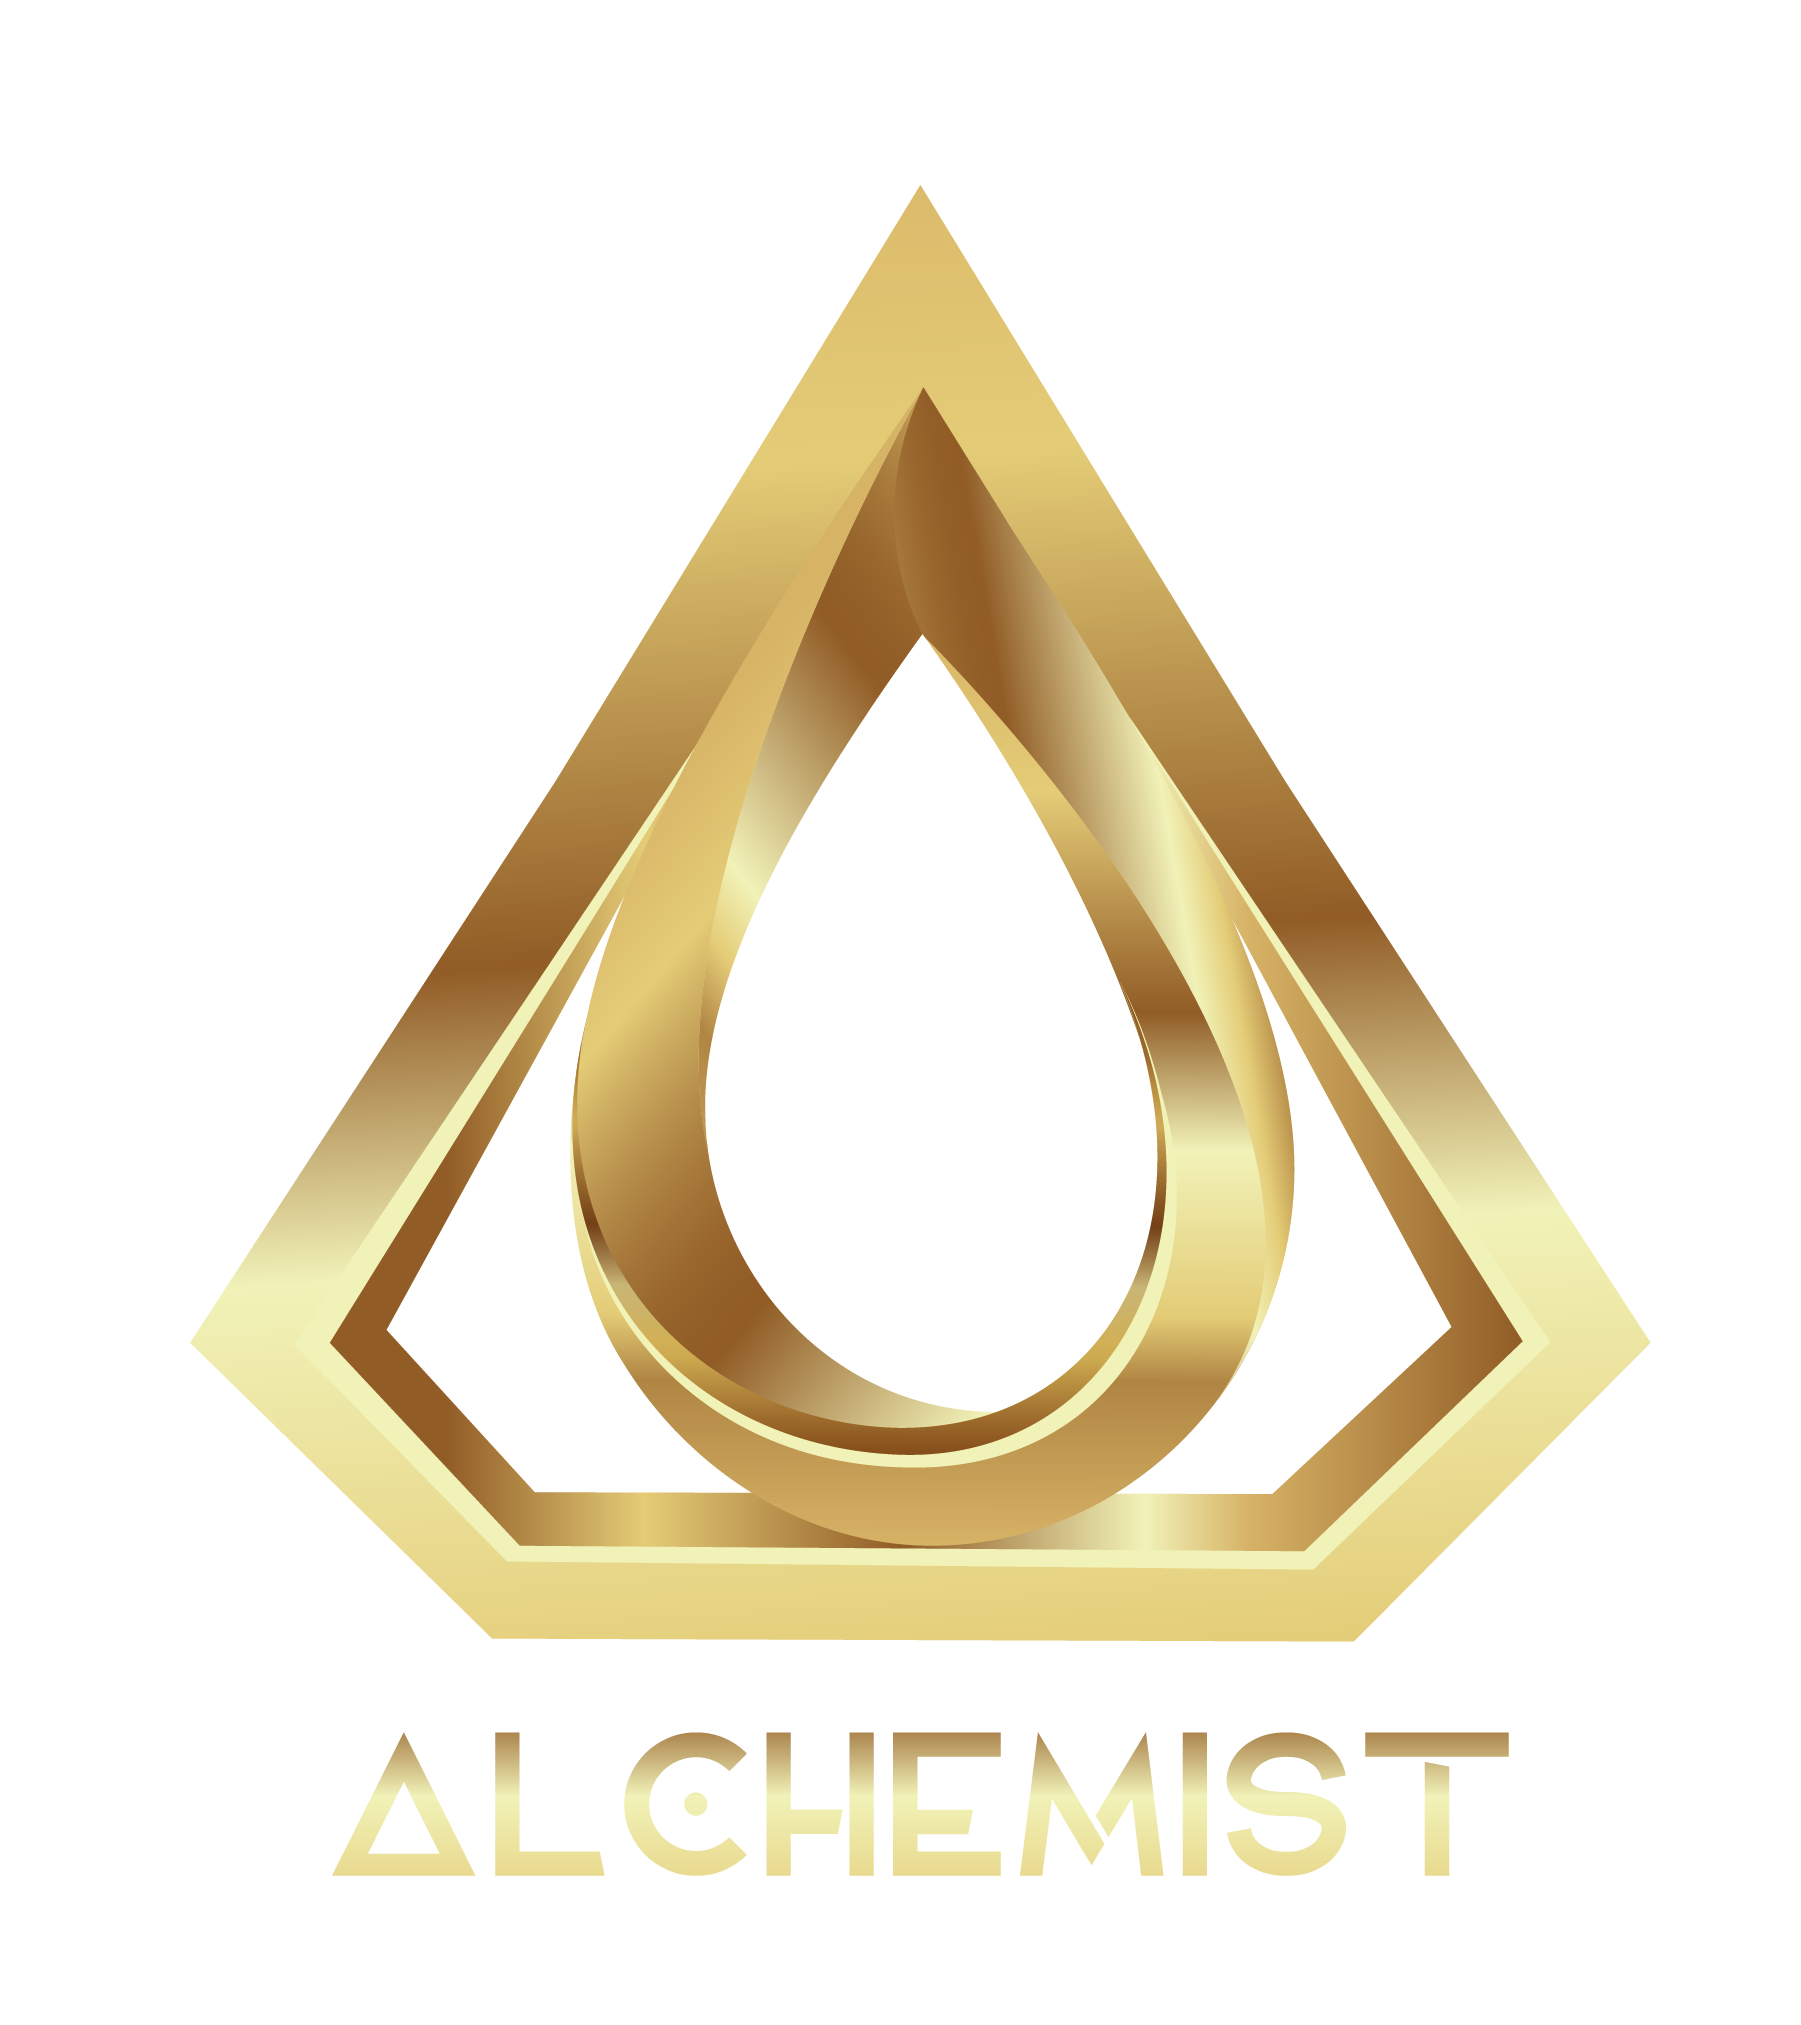 982-alchemist-logo-01.png